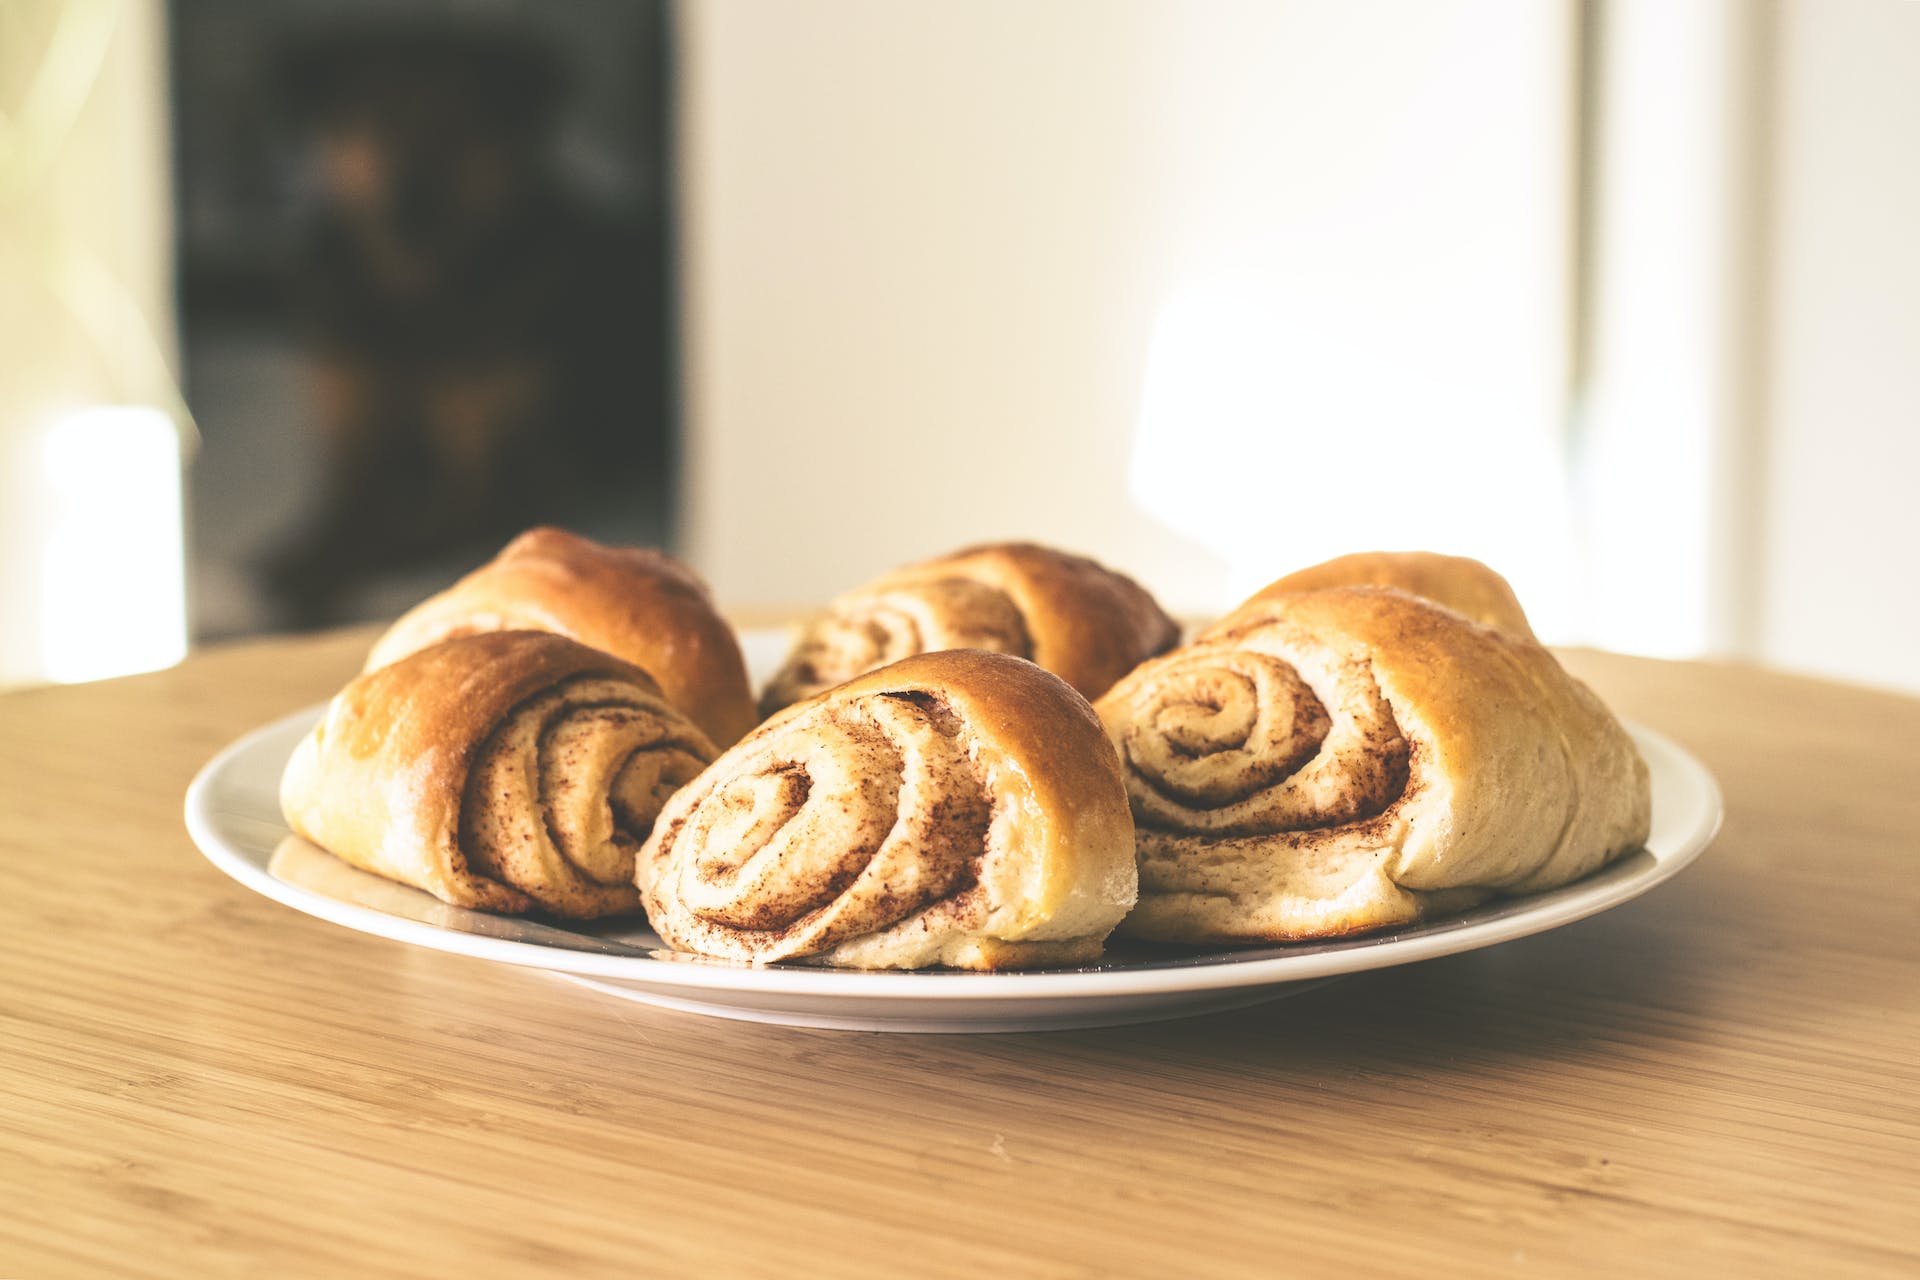 Cinnamon buns on plate | Source: Pexels